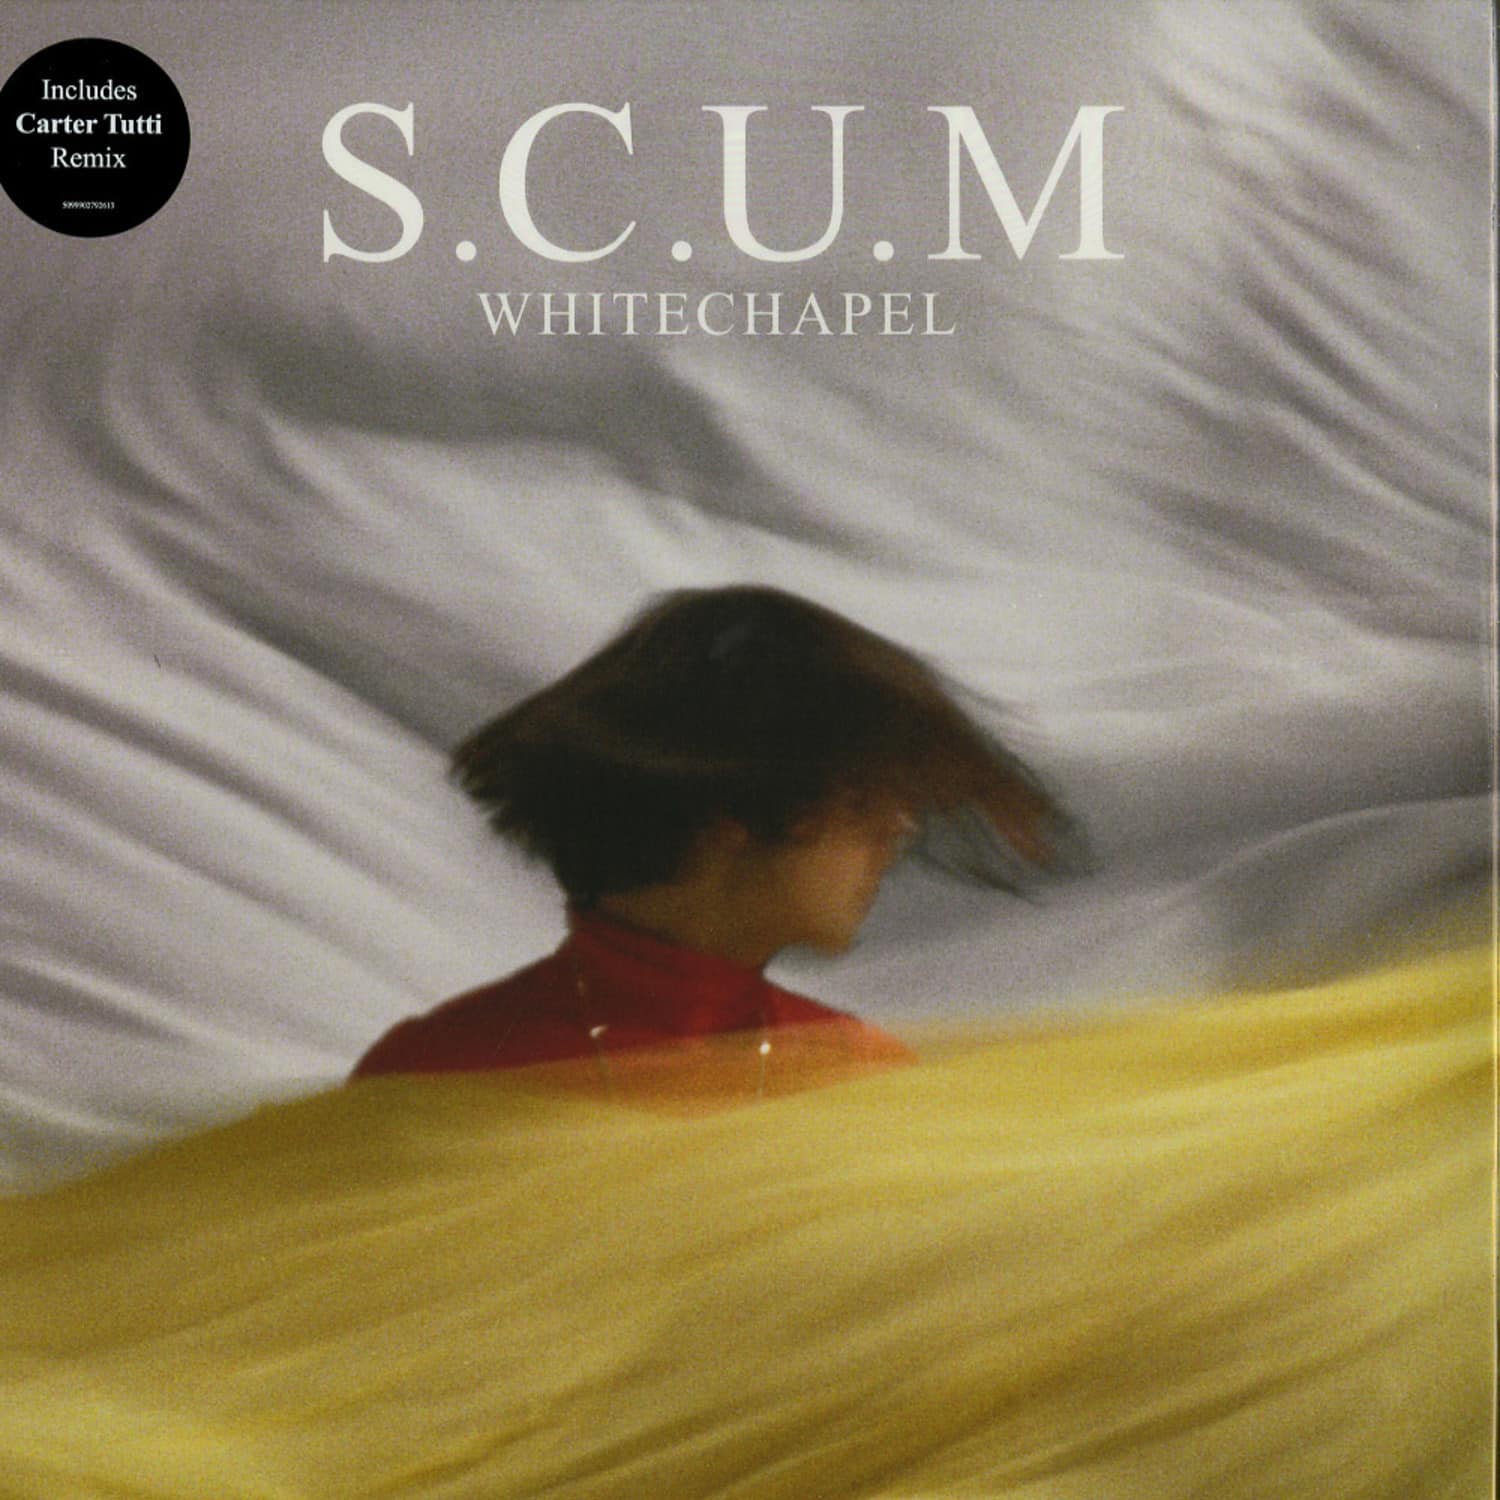 S.C.U.M. - WHITECHAPEL 